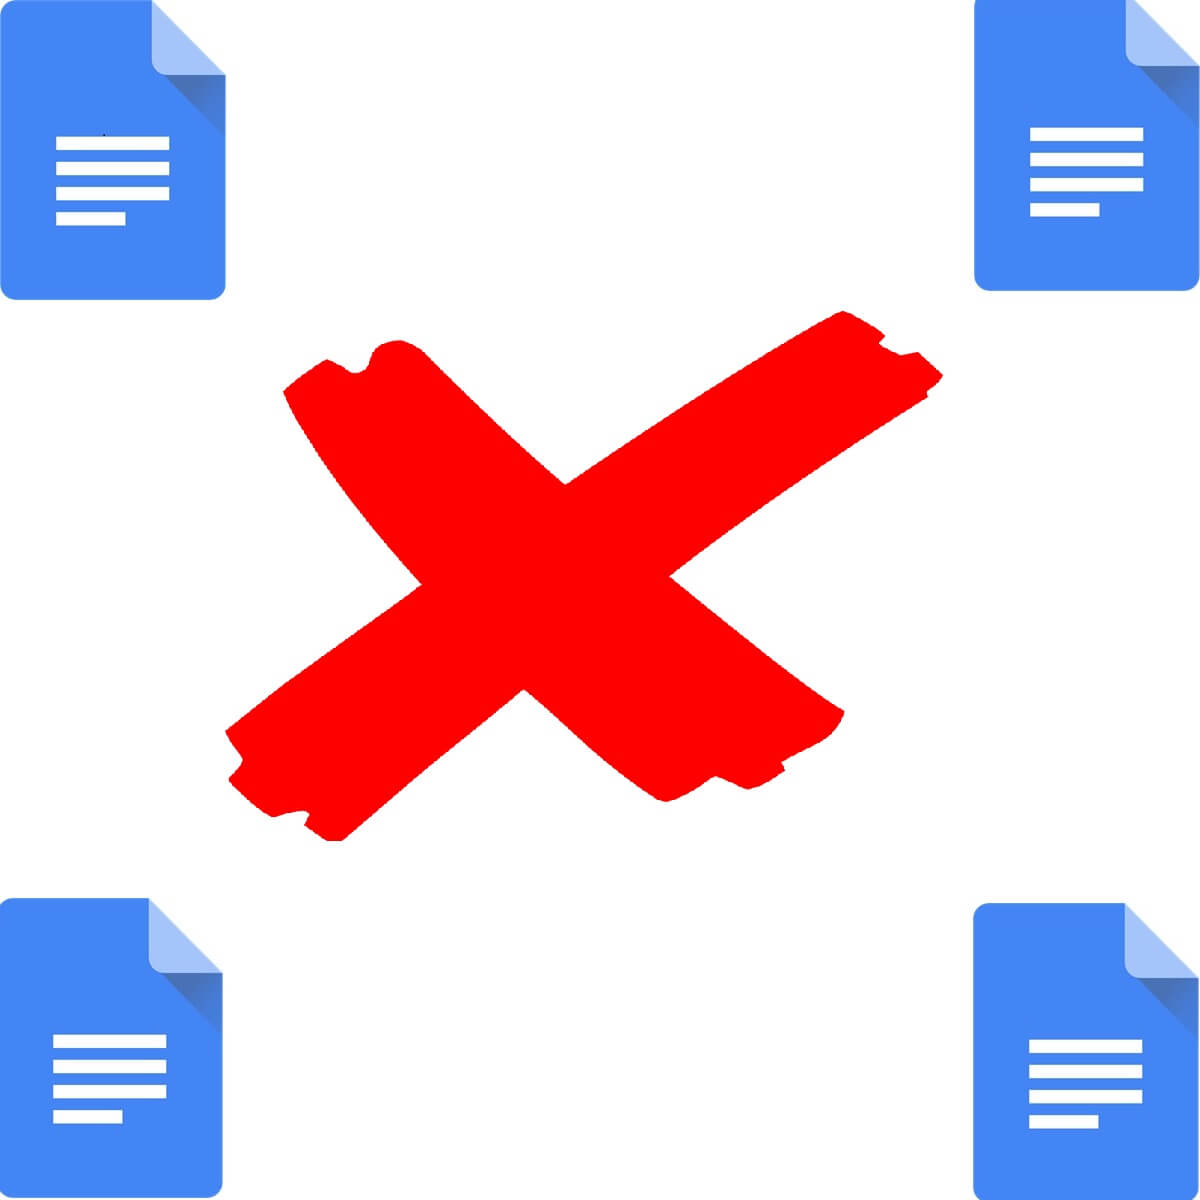 Fix: Google Docs Unable To Load File - MiniTool